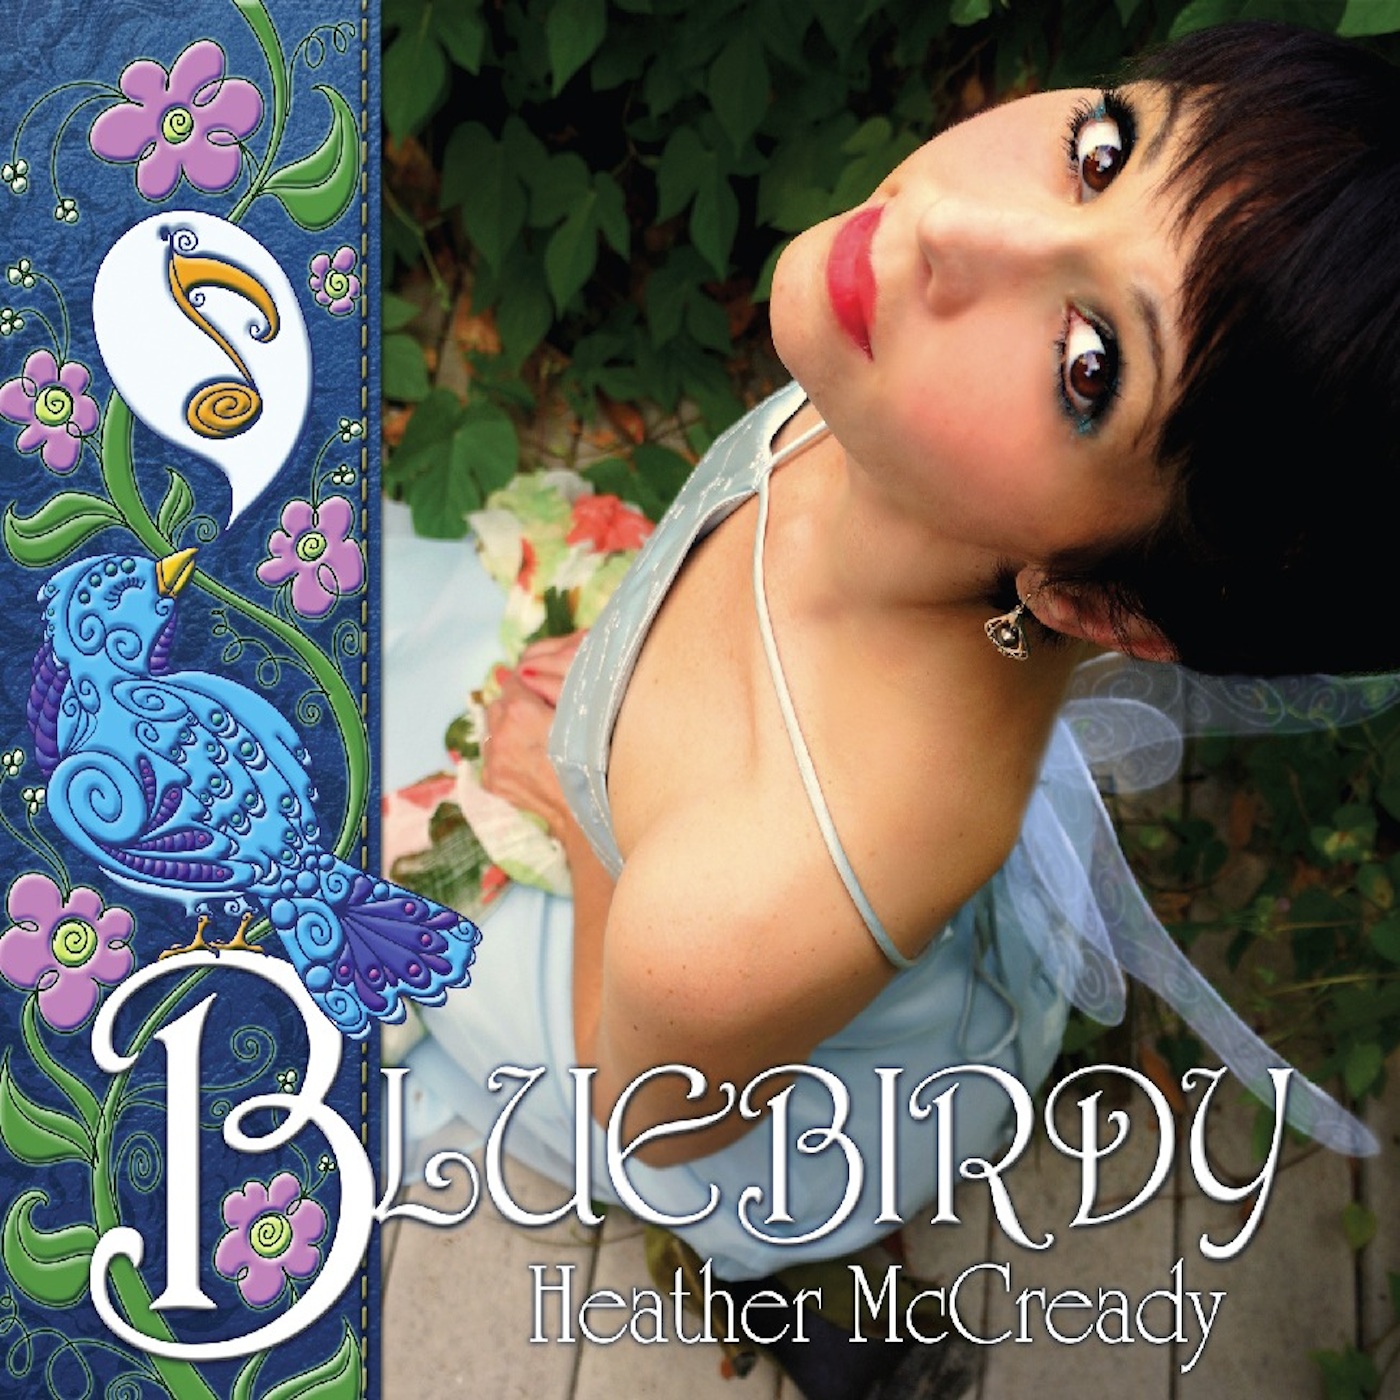 Heather McCready's fifth CD, an award winning editors choice on CDBaby!